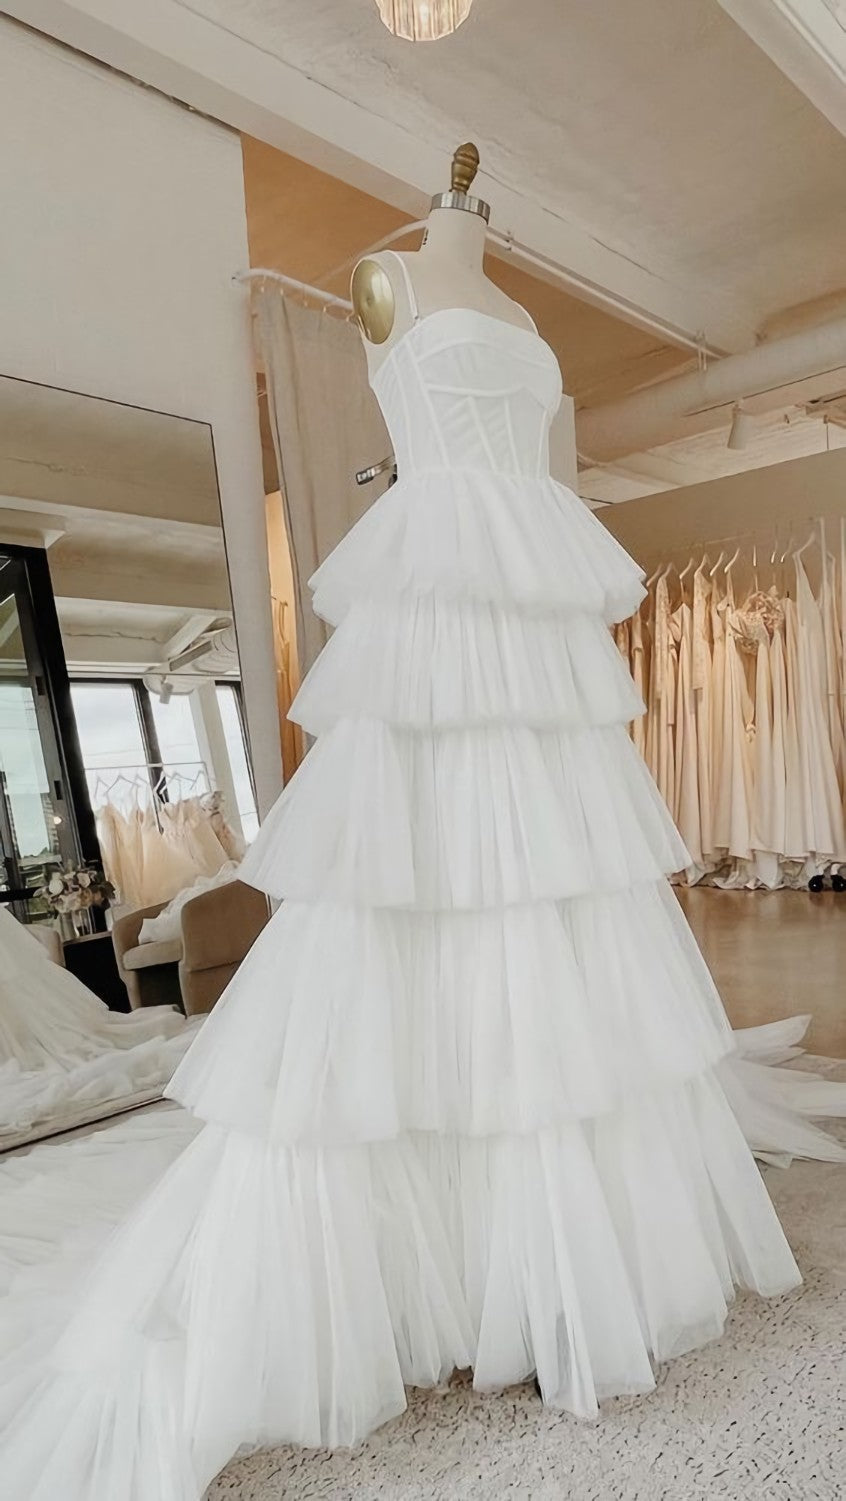 White Corset Prom Dresses New Corset Formal Dress Corset Wedding Dress outfit, Wedding Dresses For Summer